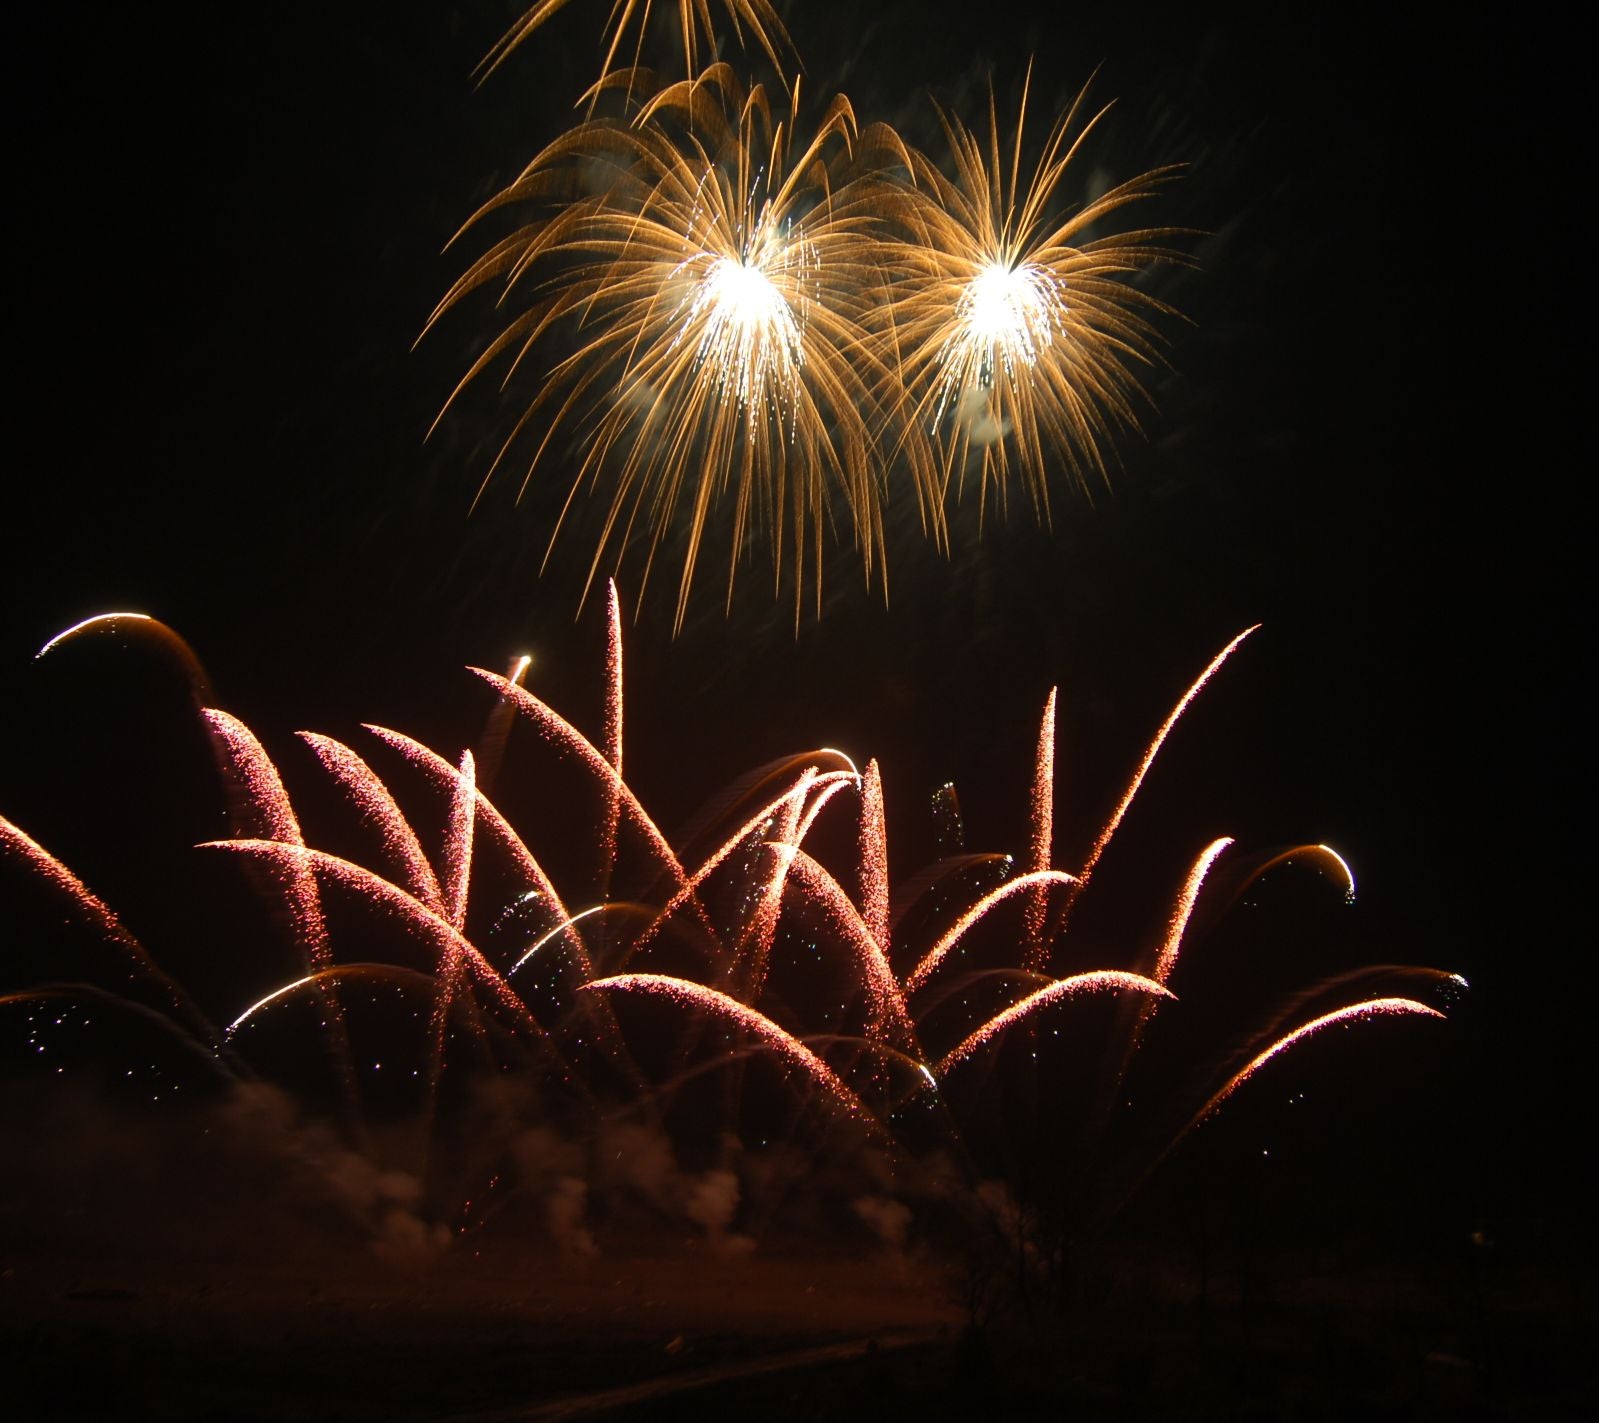 Luiyang Dancing Team win Fireworks Contest